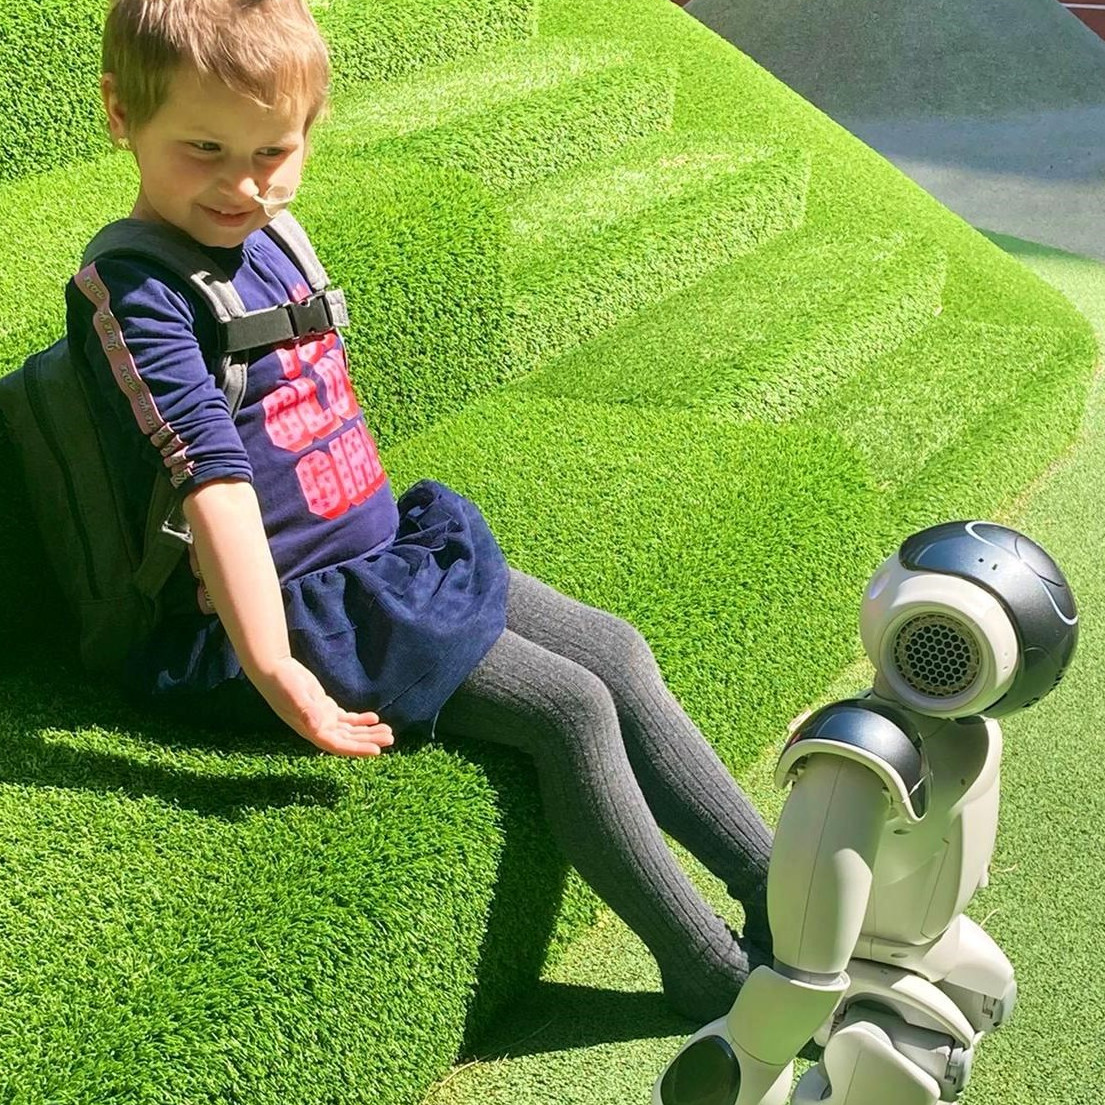 Hero, a robot buddy for kids